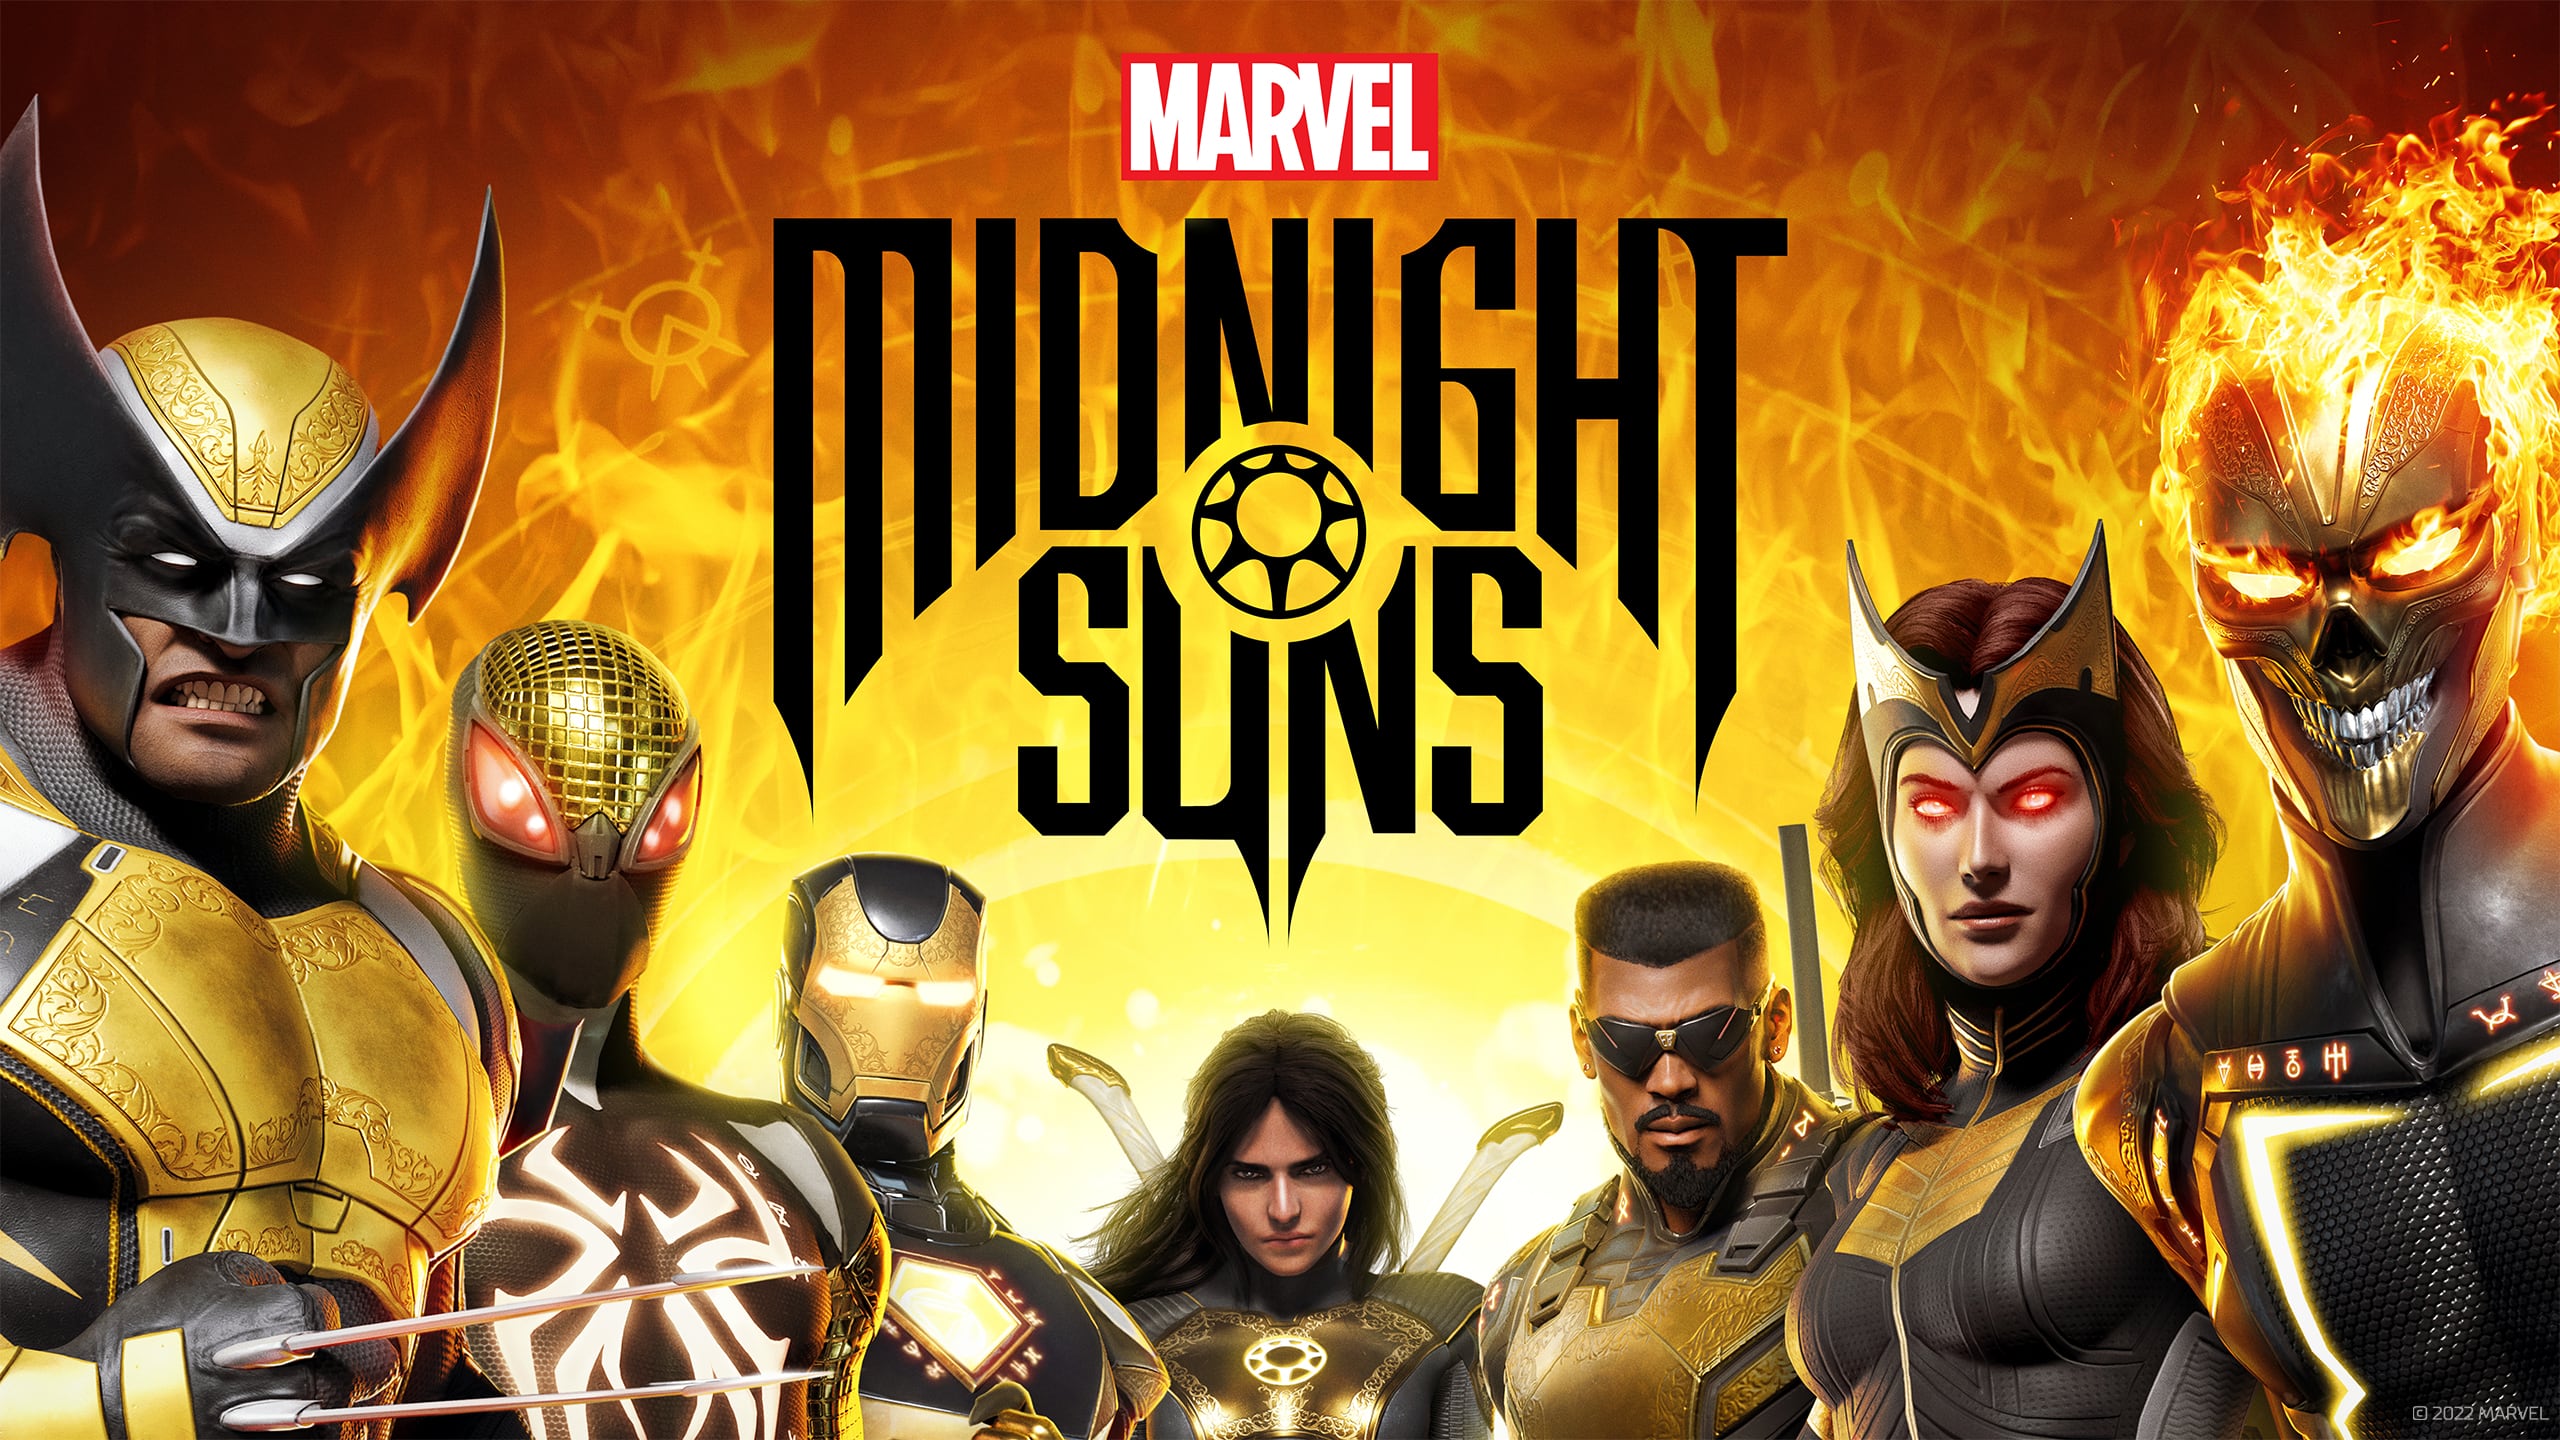 Midnight Suns Walkthrough, Guides & Wiki 